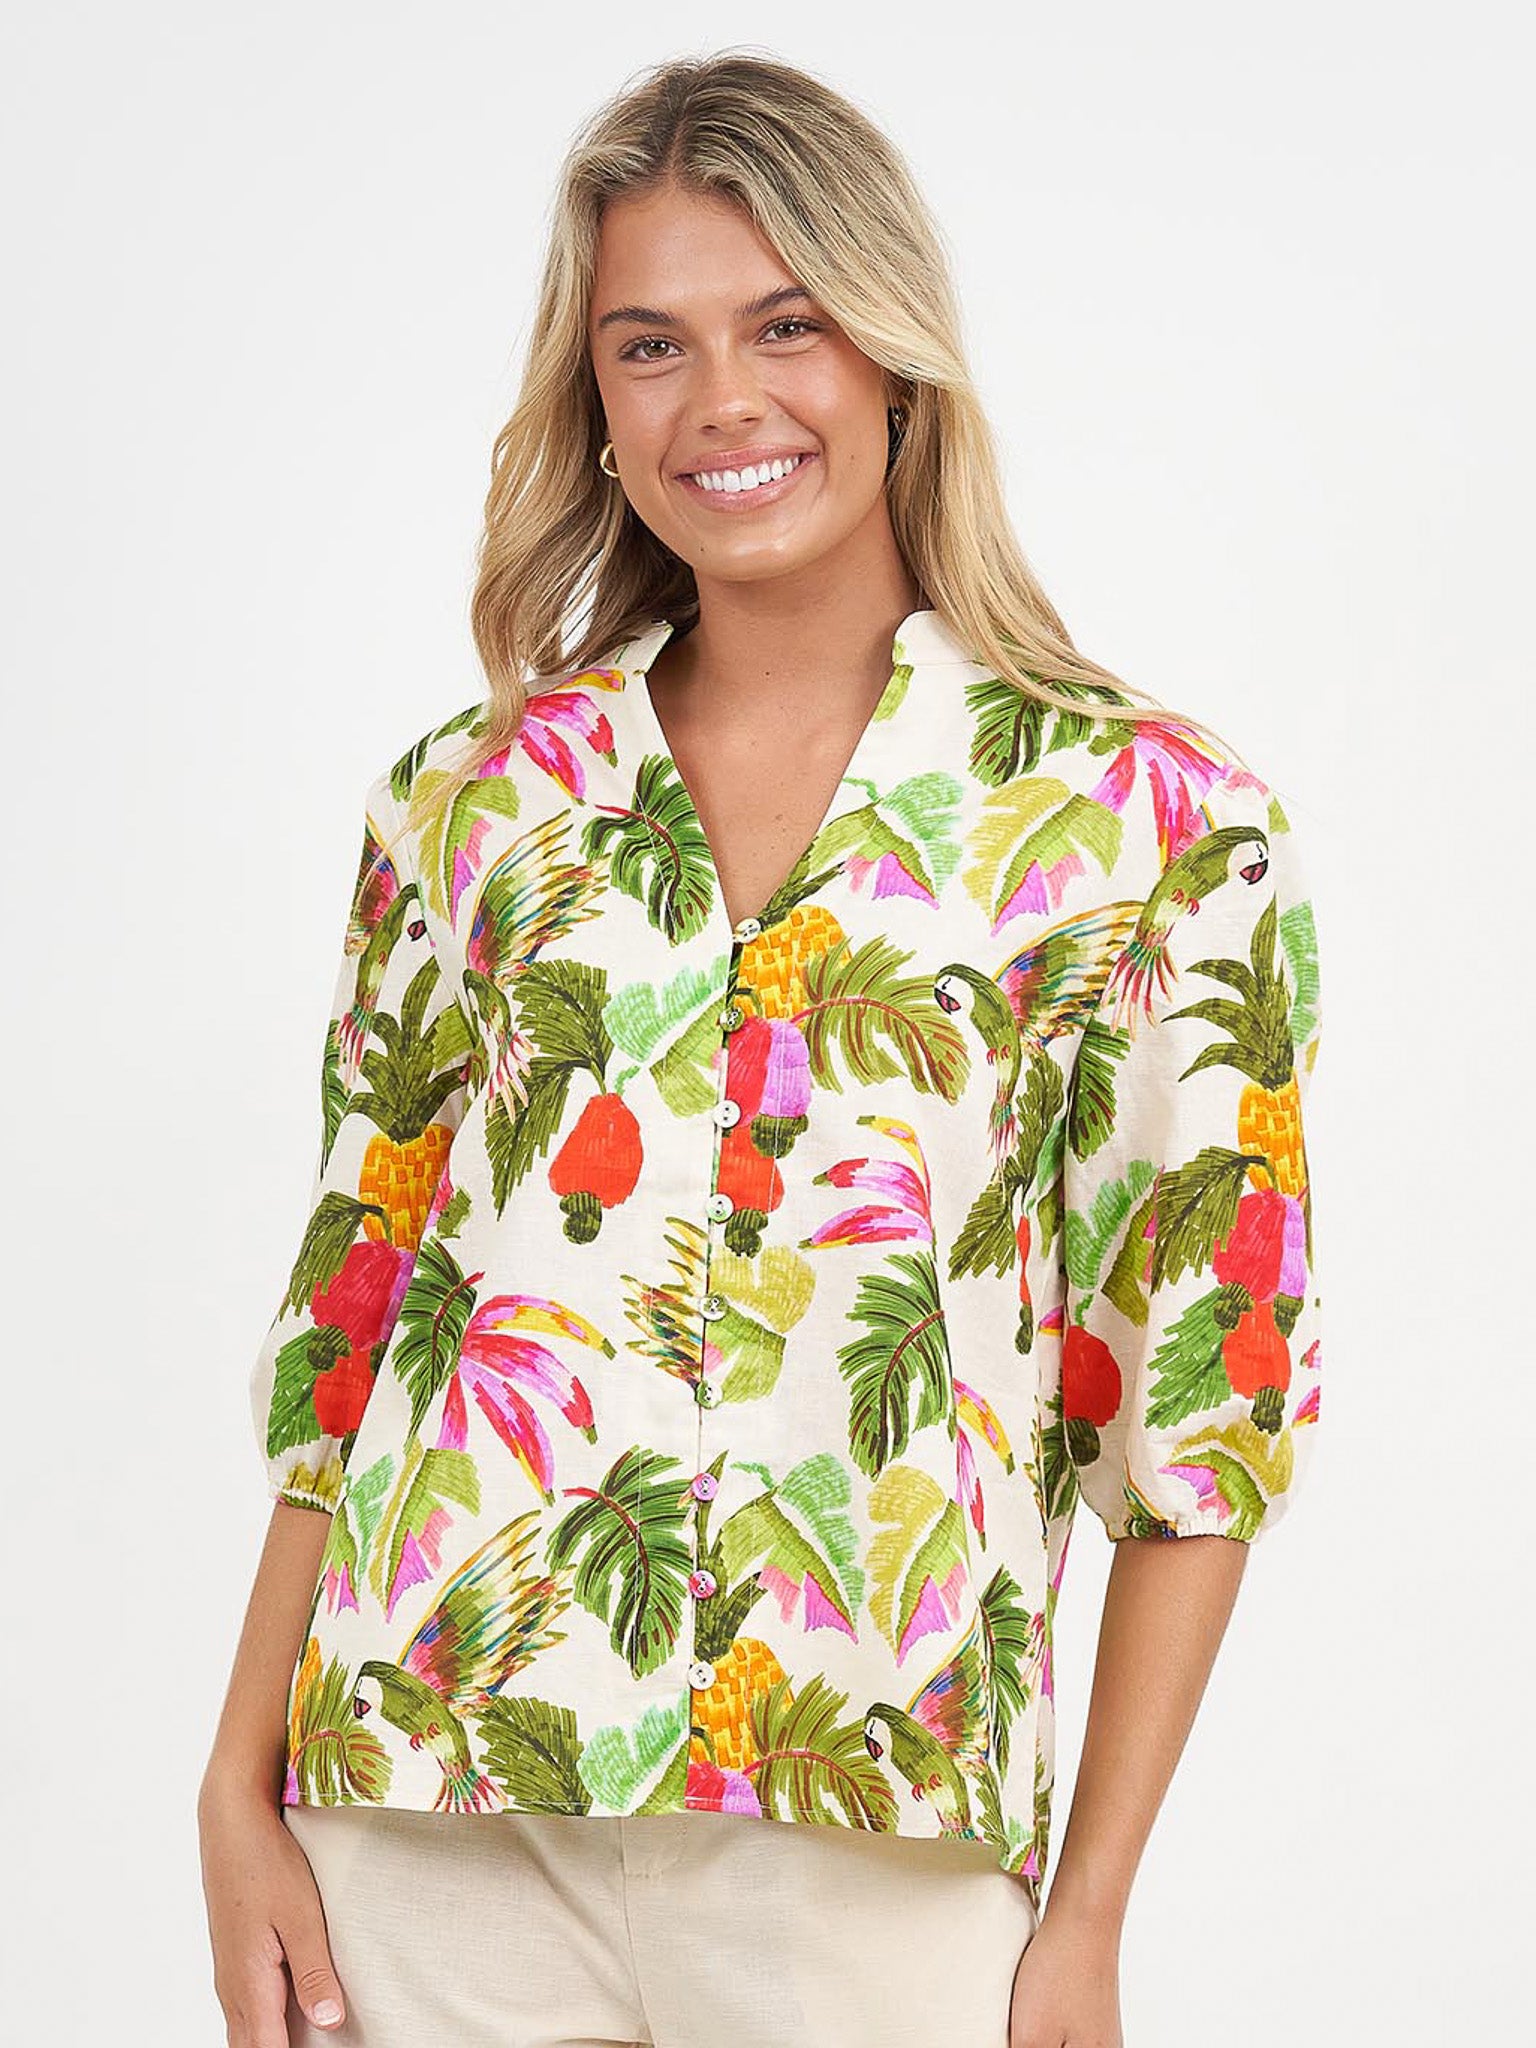 Liberty Rose Khaki Tropical Print Linen Top